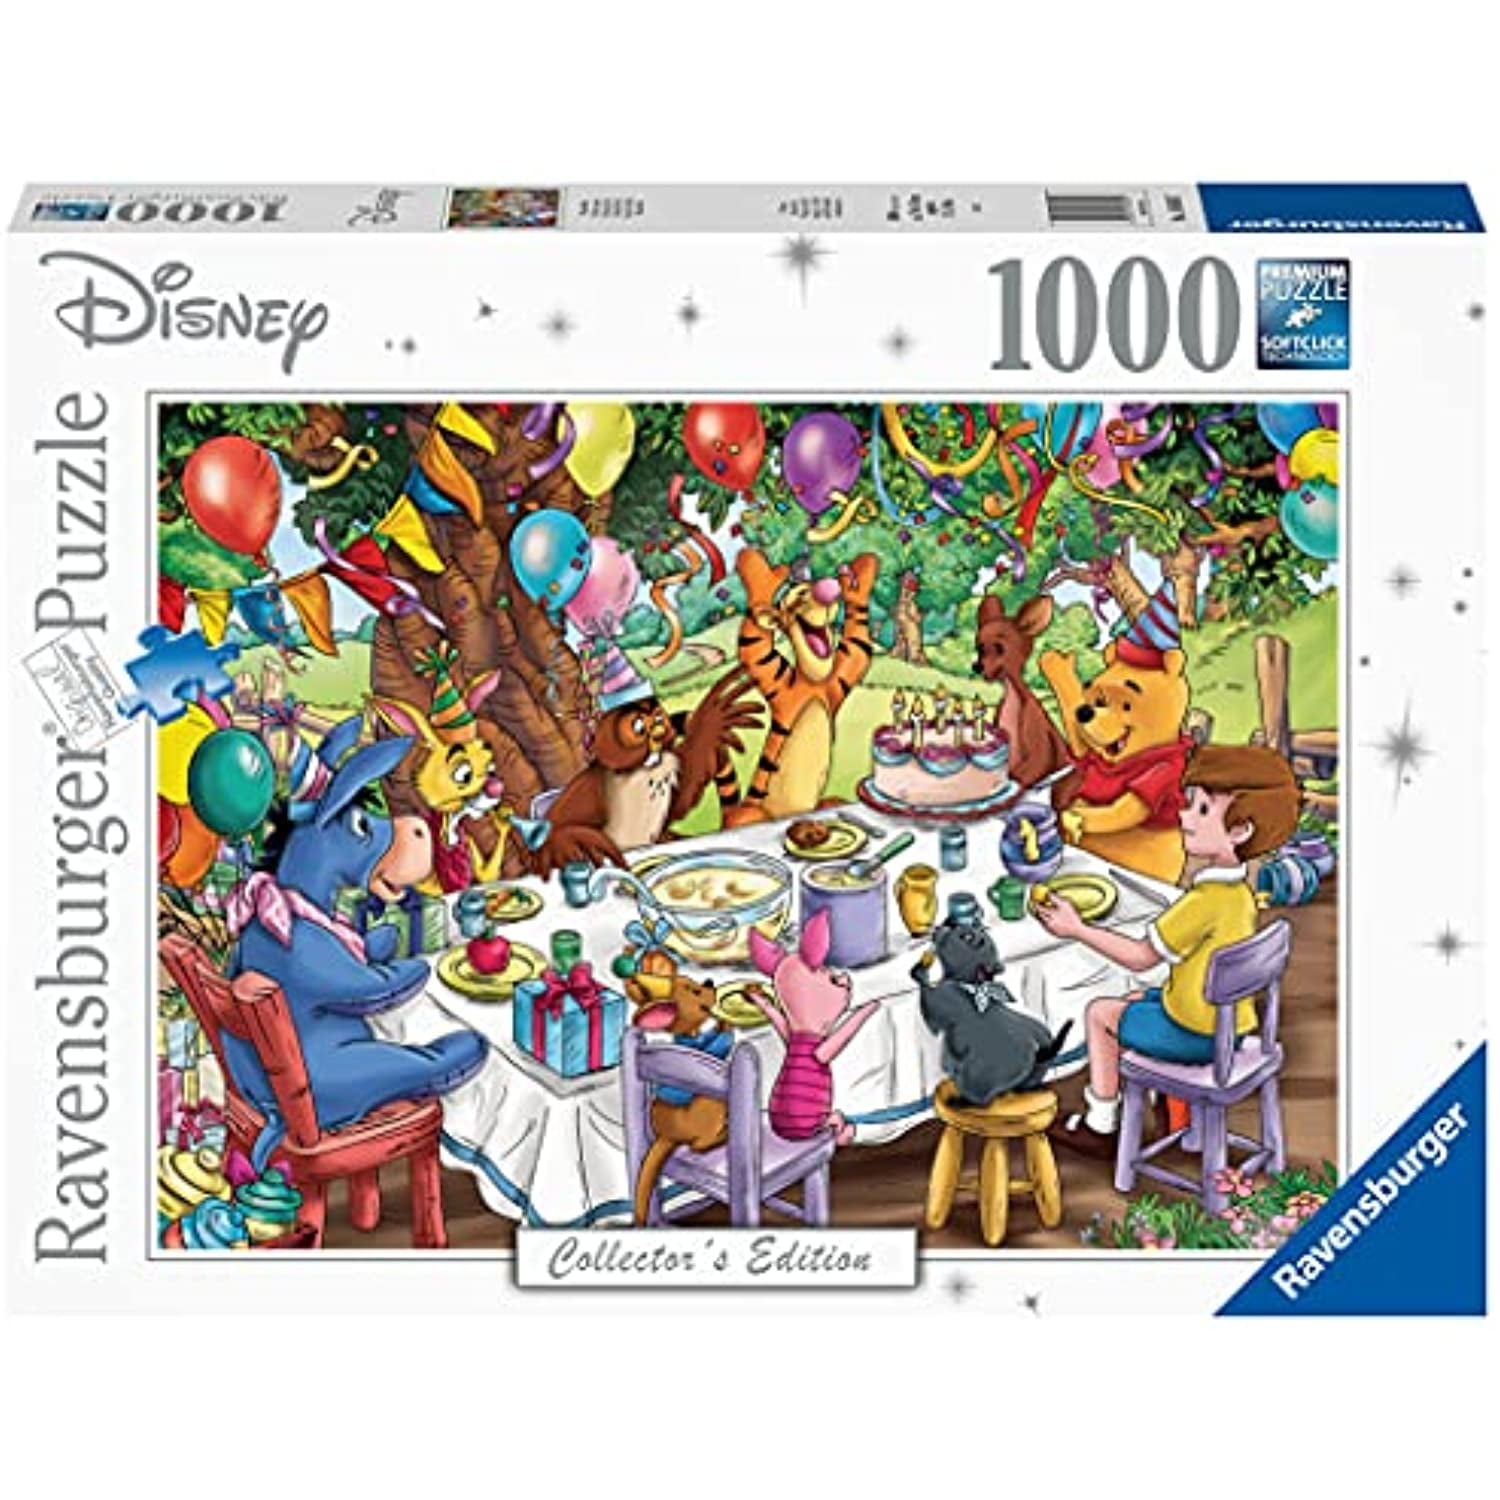 1000pcs Jigsaw Puzzle Disney 100 Years of Wonder Cute Celebration 51x73.5cm